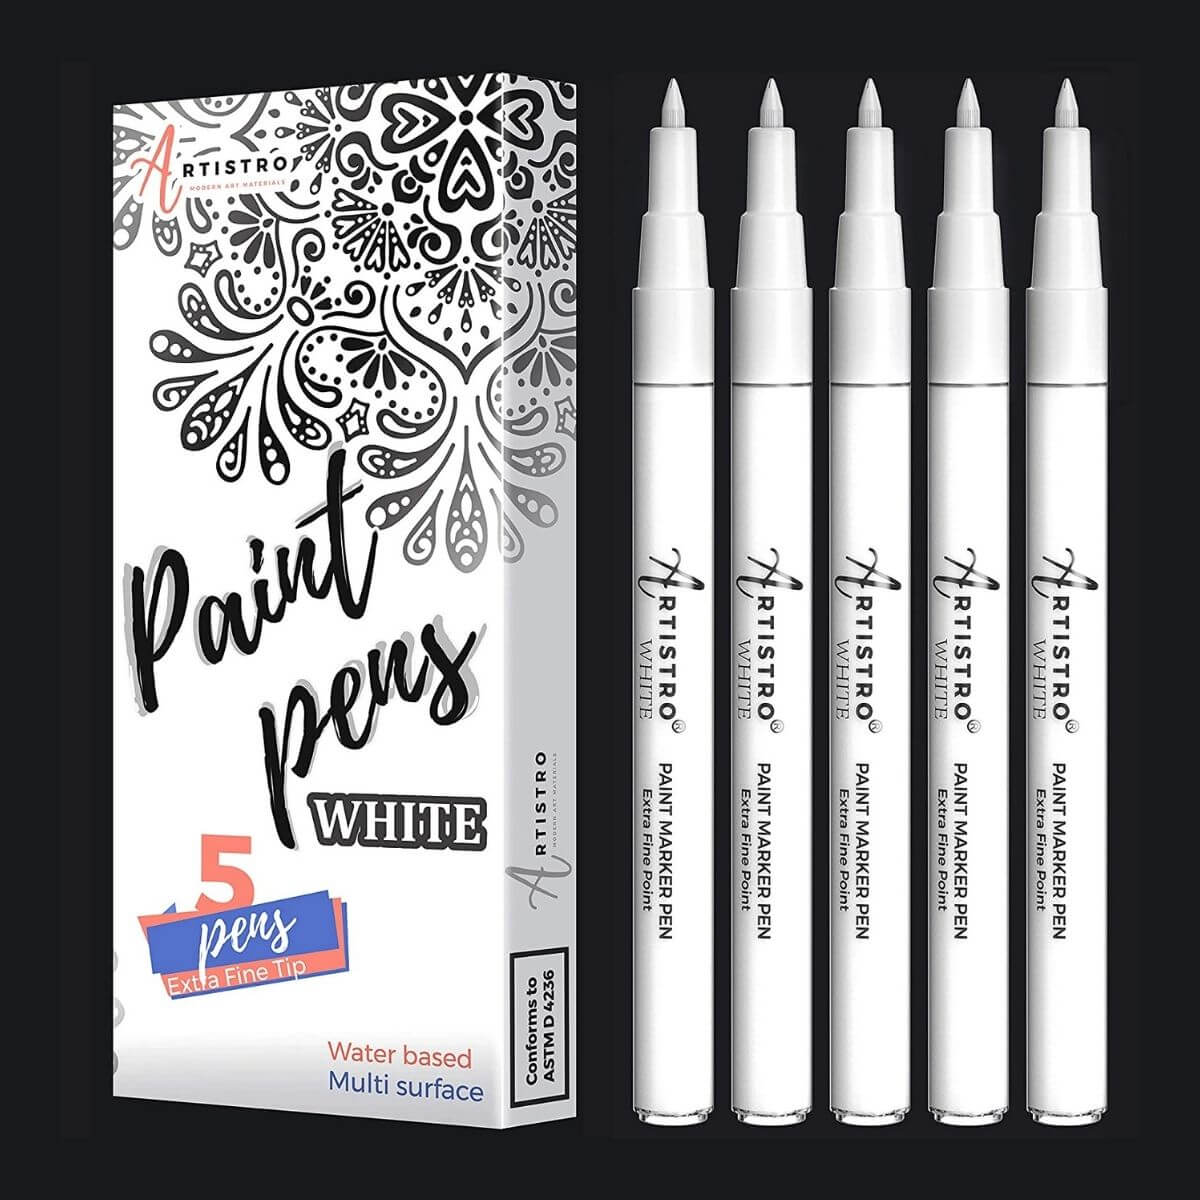 CANVAA Black & White Acrylic Paint Combo - 100ml - ARTIST SERIES